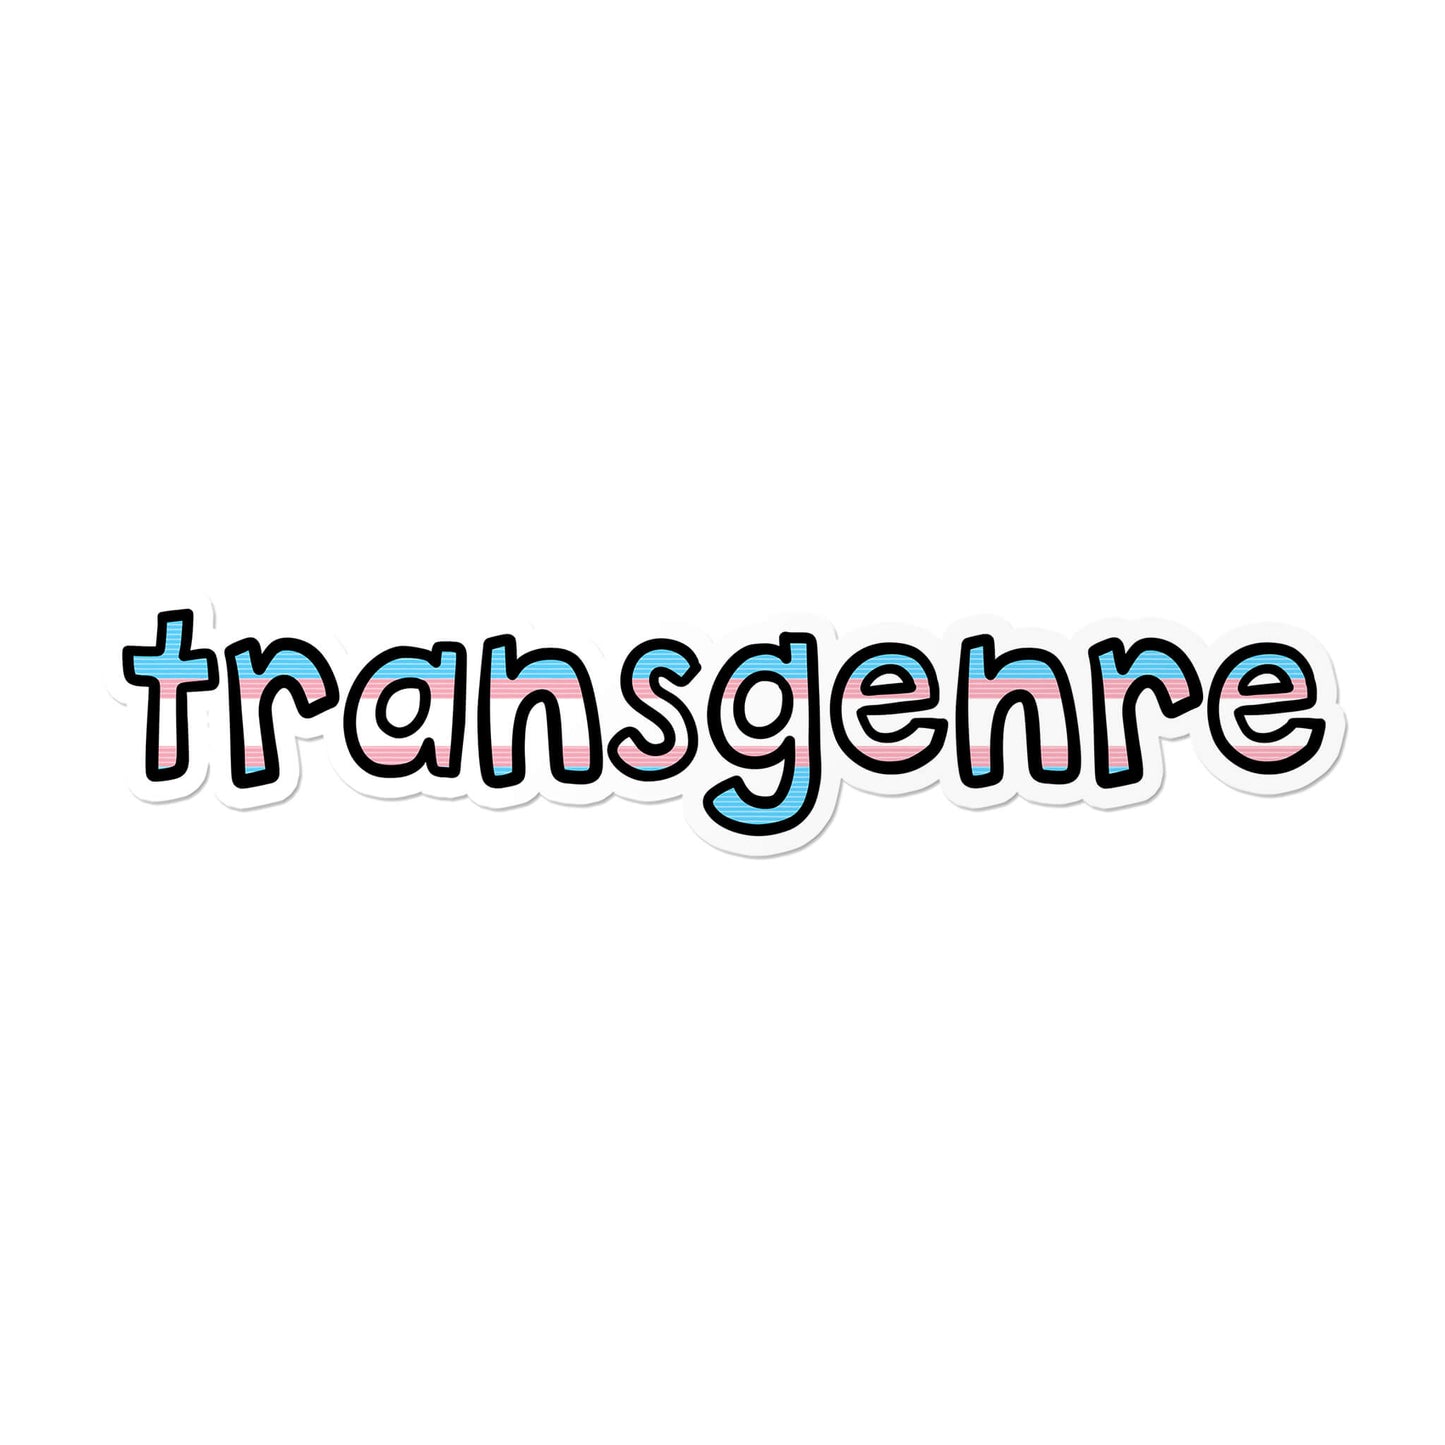 Transgenre Sticker